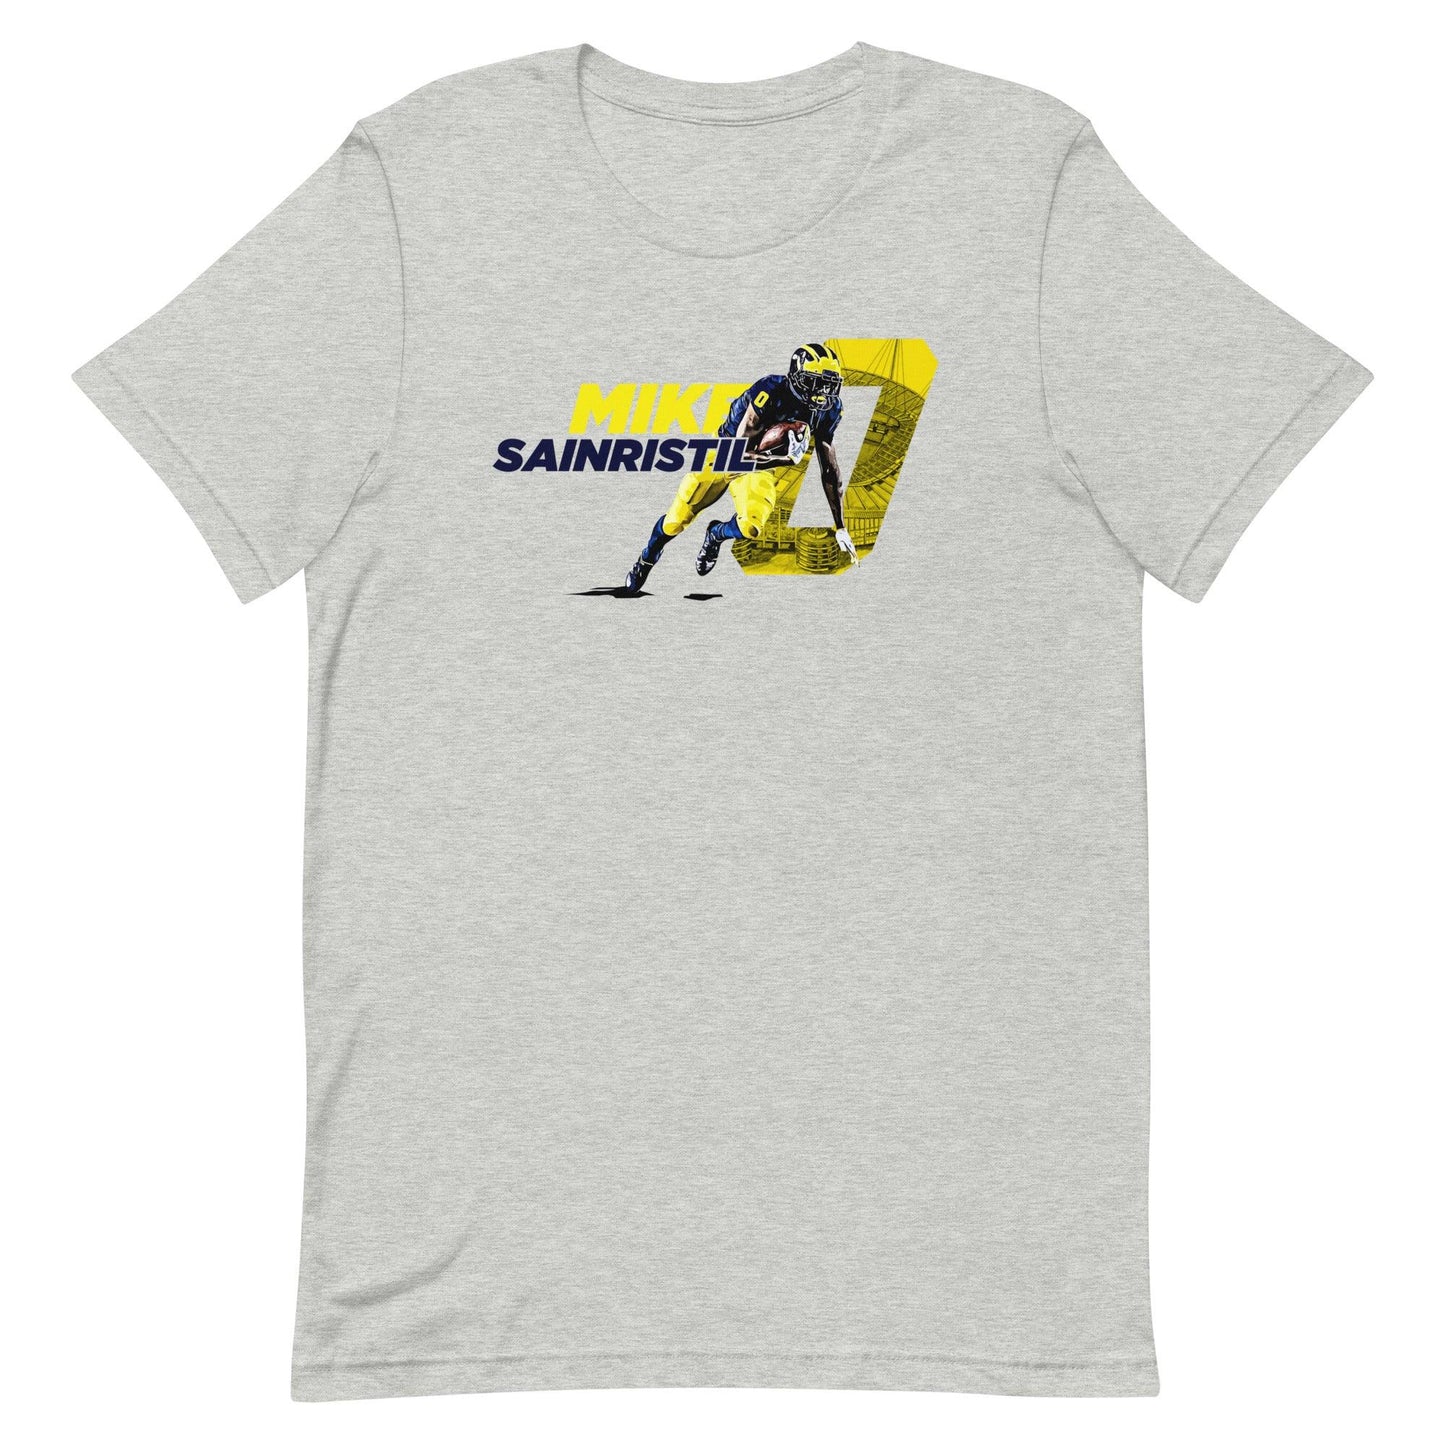 Mike Sainristil "Gameday" t-shirt - Fan Arch